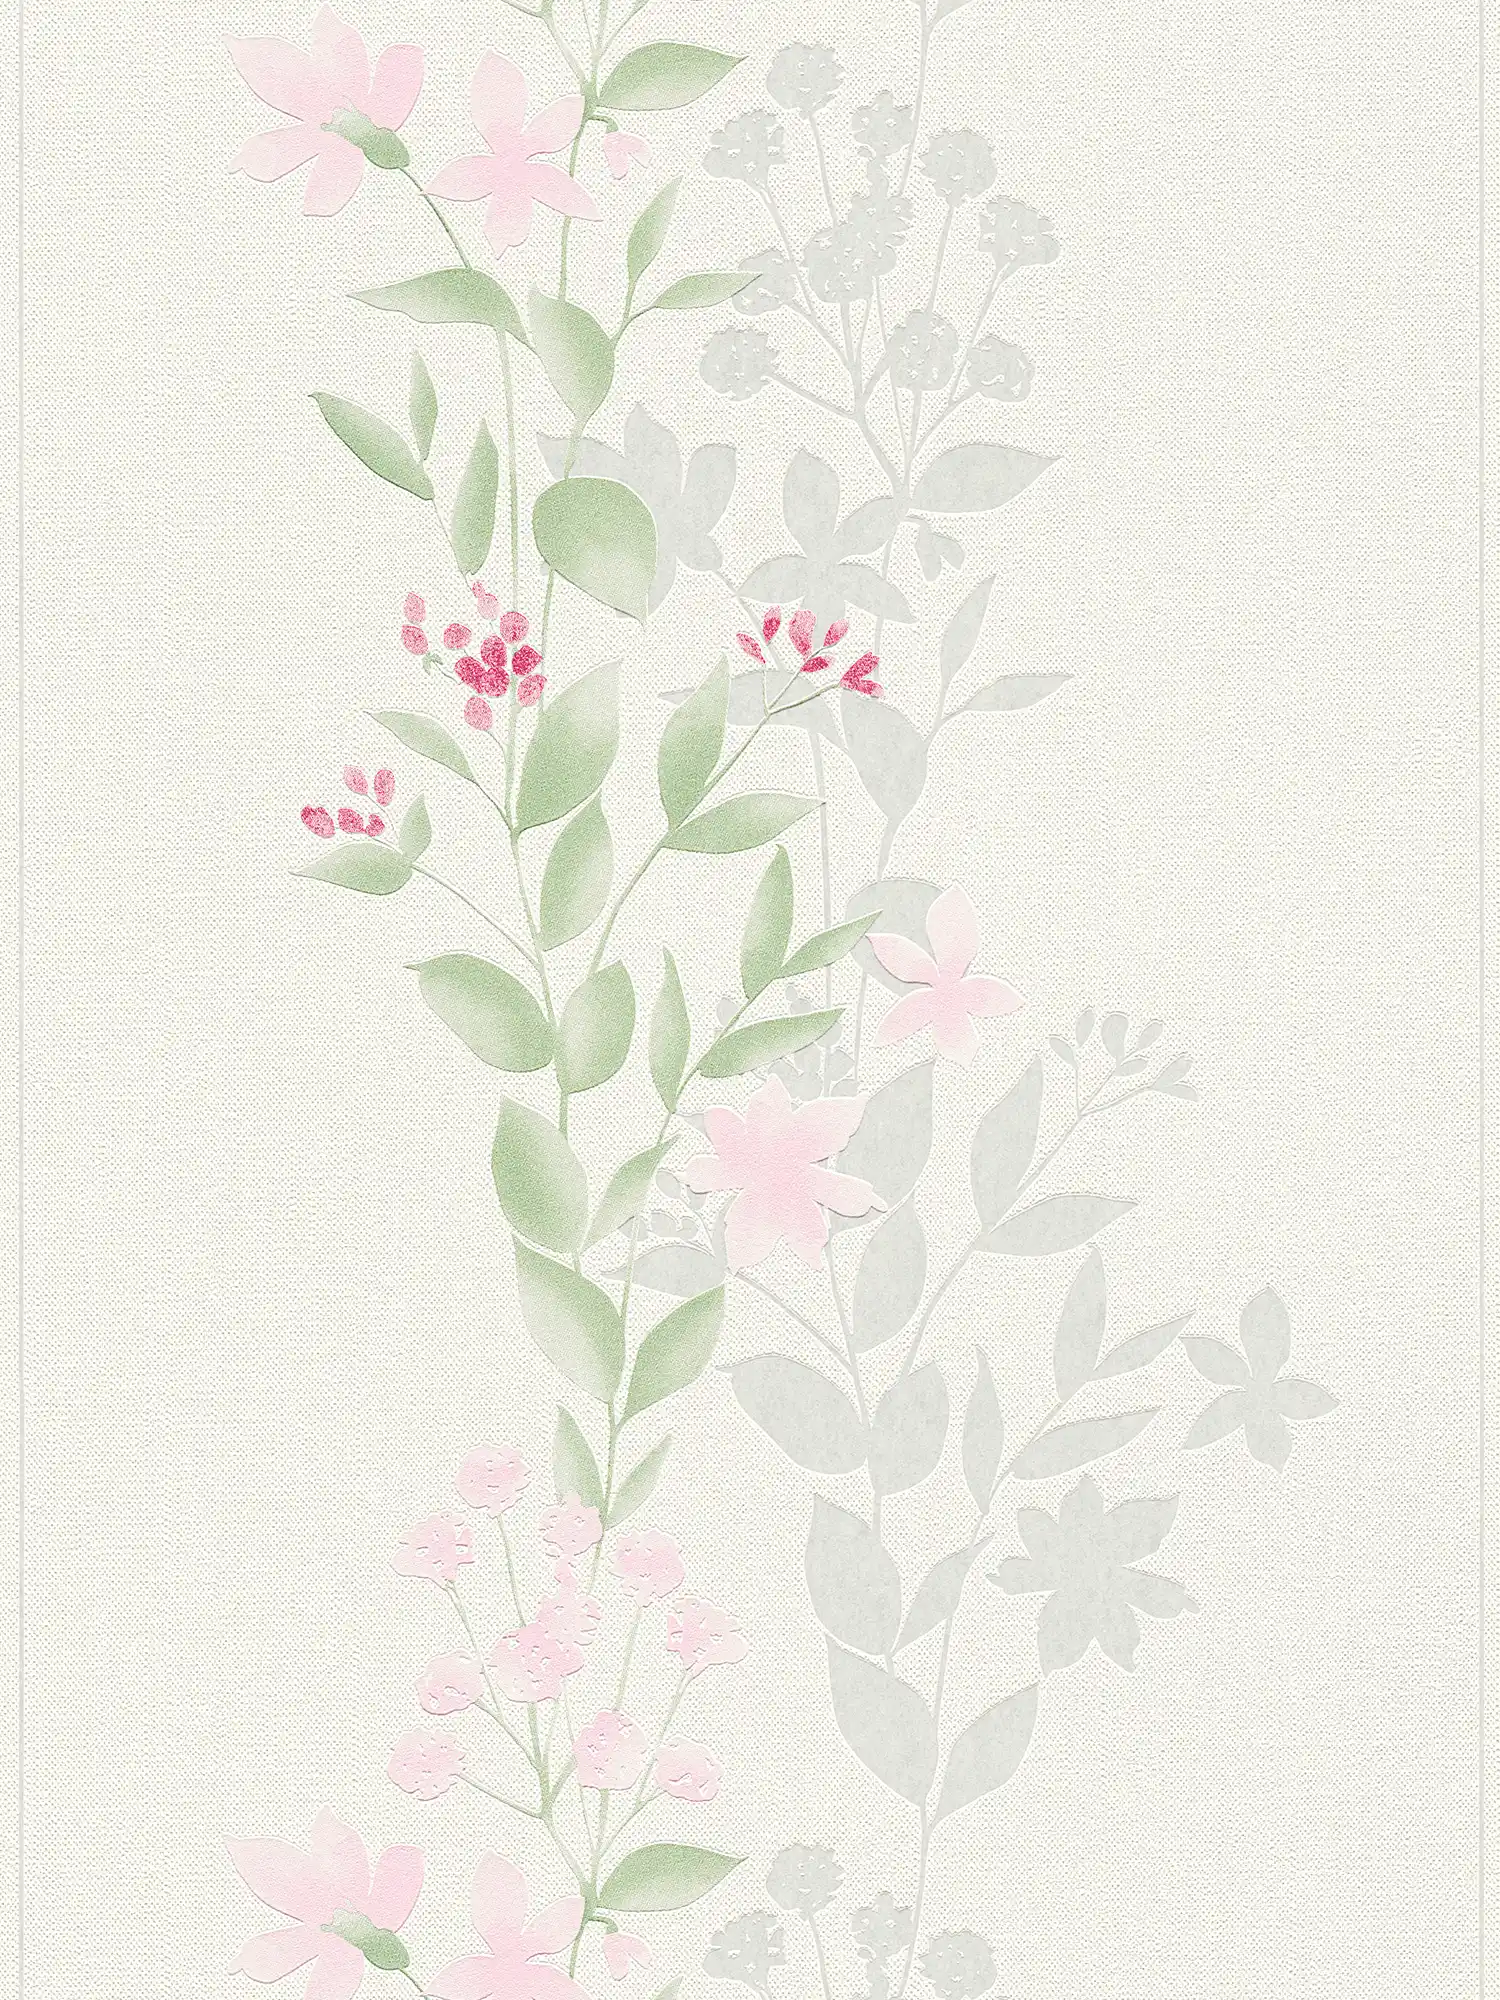 carta da parati a motivi floreali, effetto acquerello - grigio, verde, rosa
